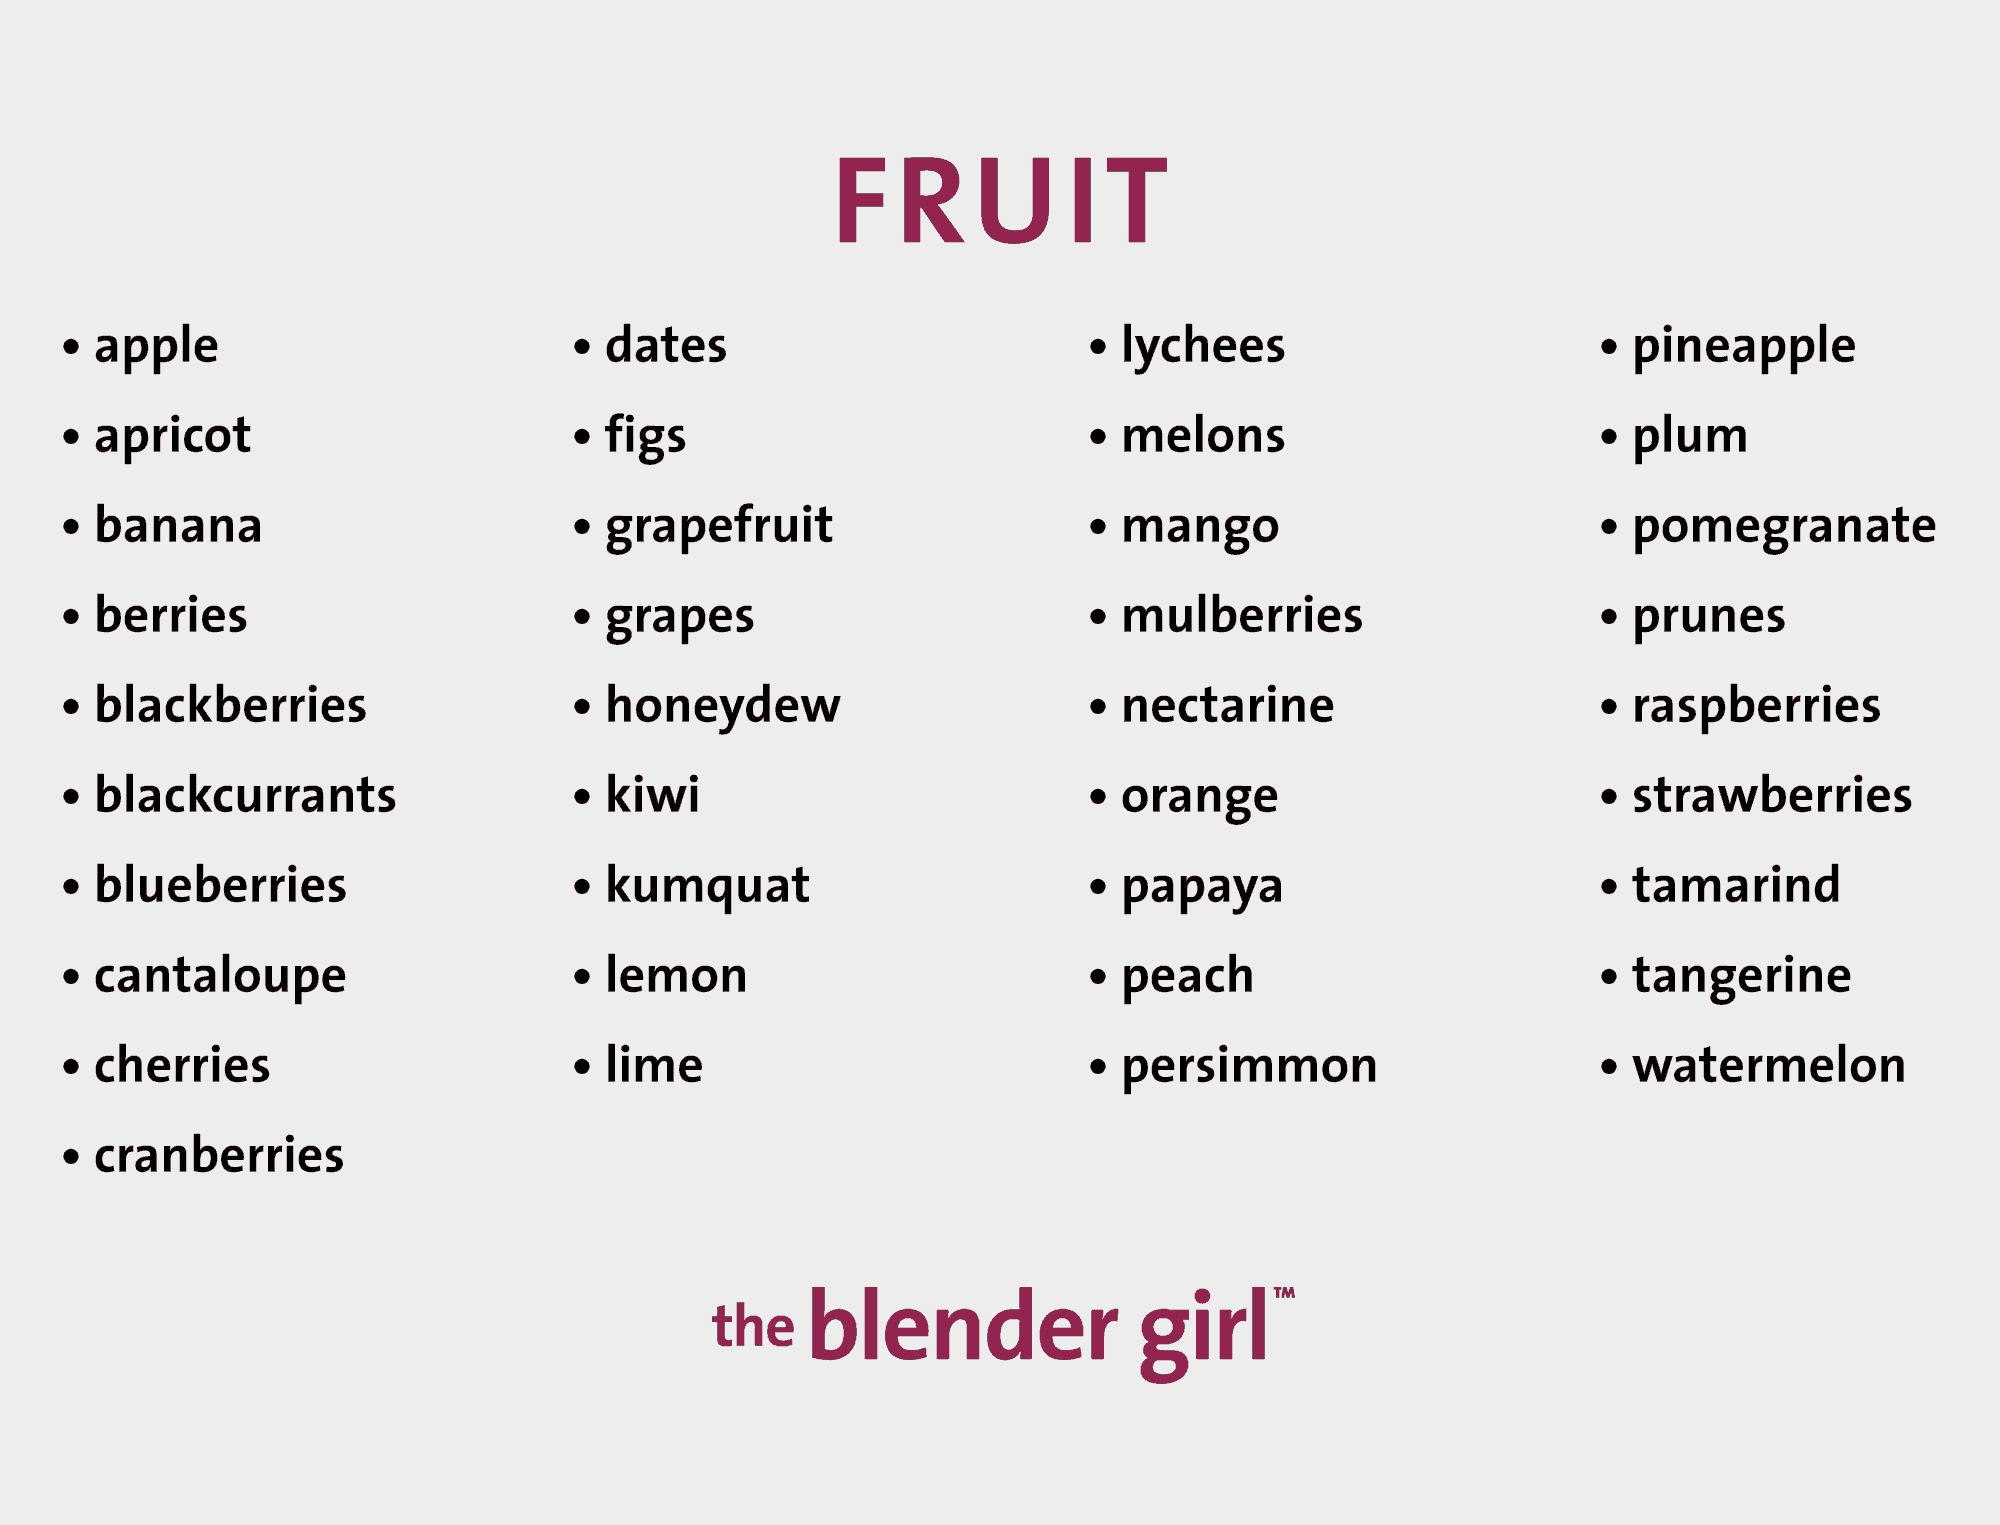 Fruit Combining Chart